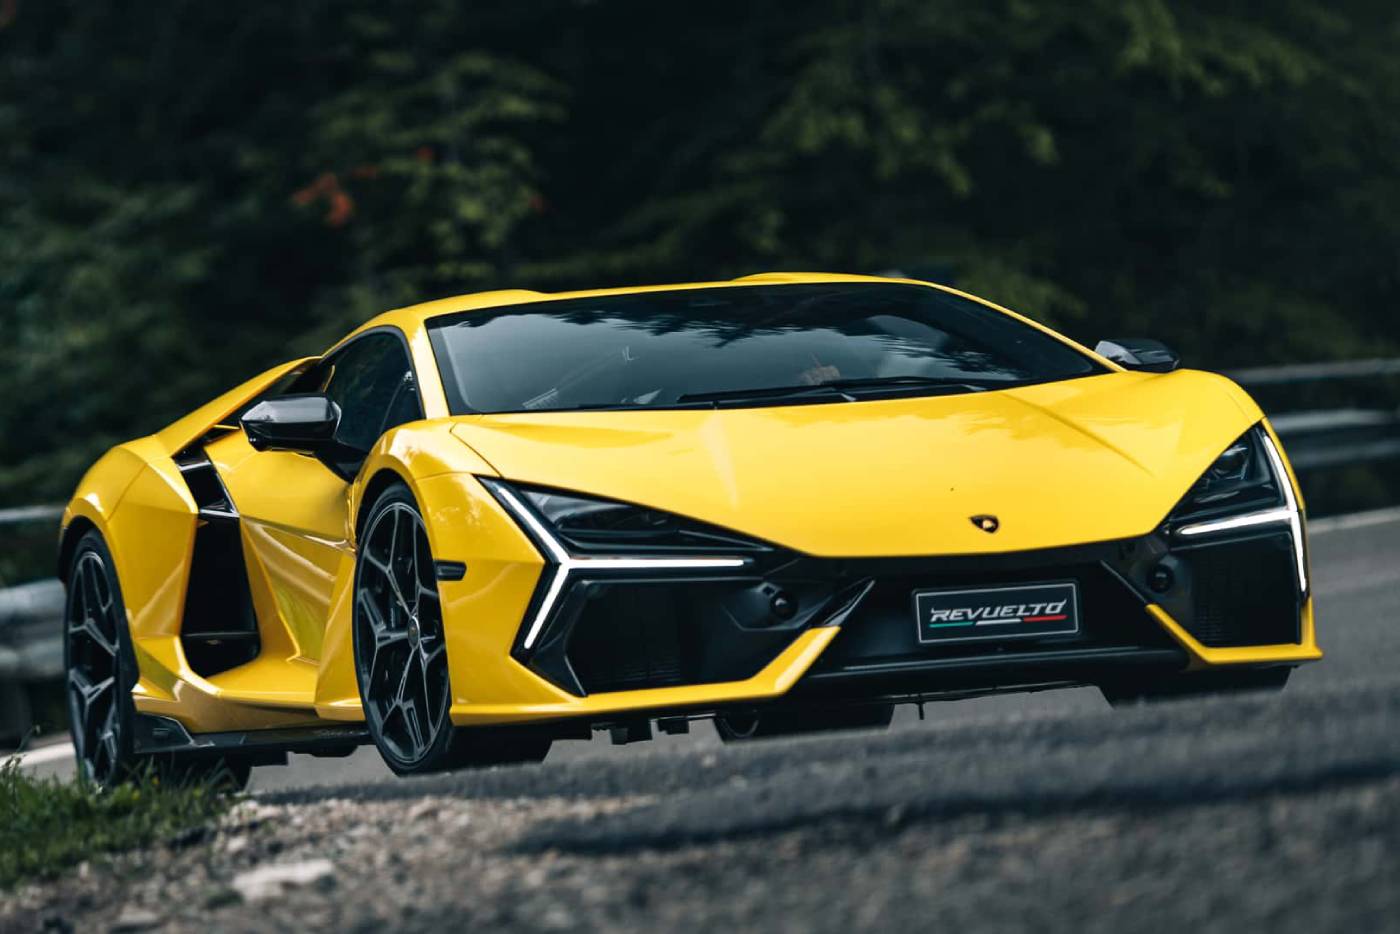 Sold out μέχρι το 2026 η Lamborghini Revuelto